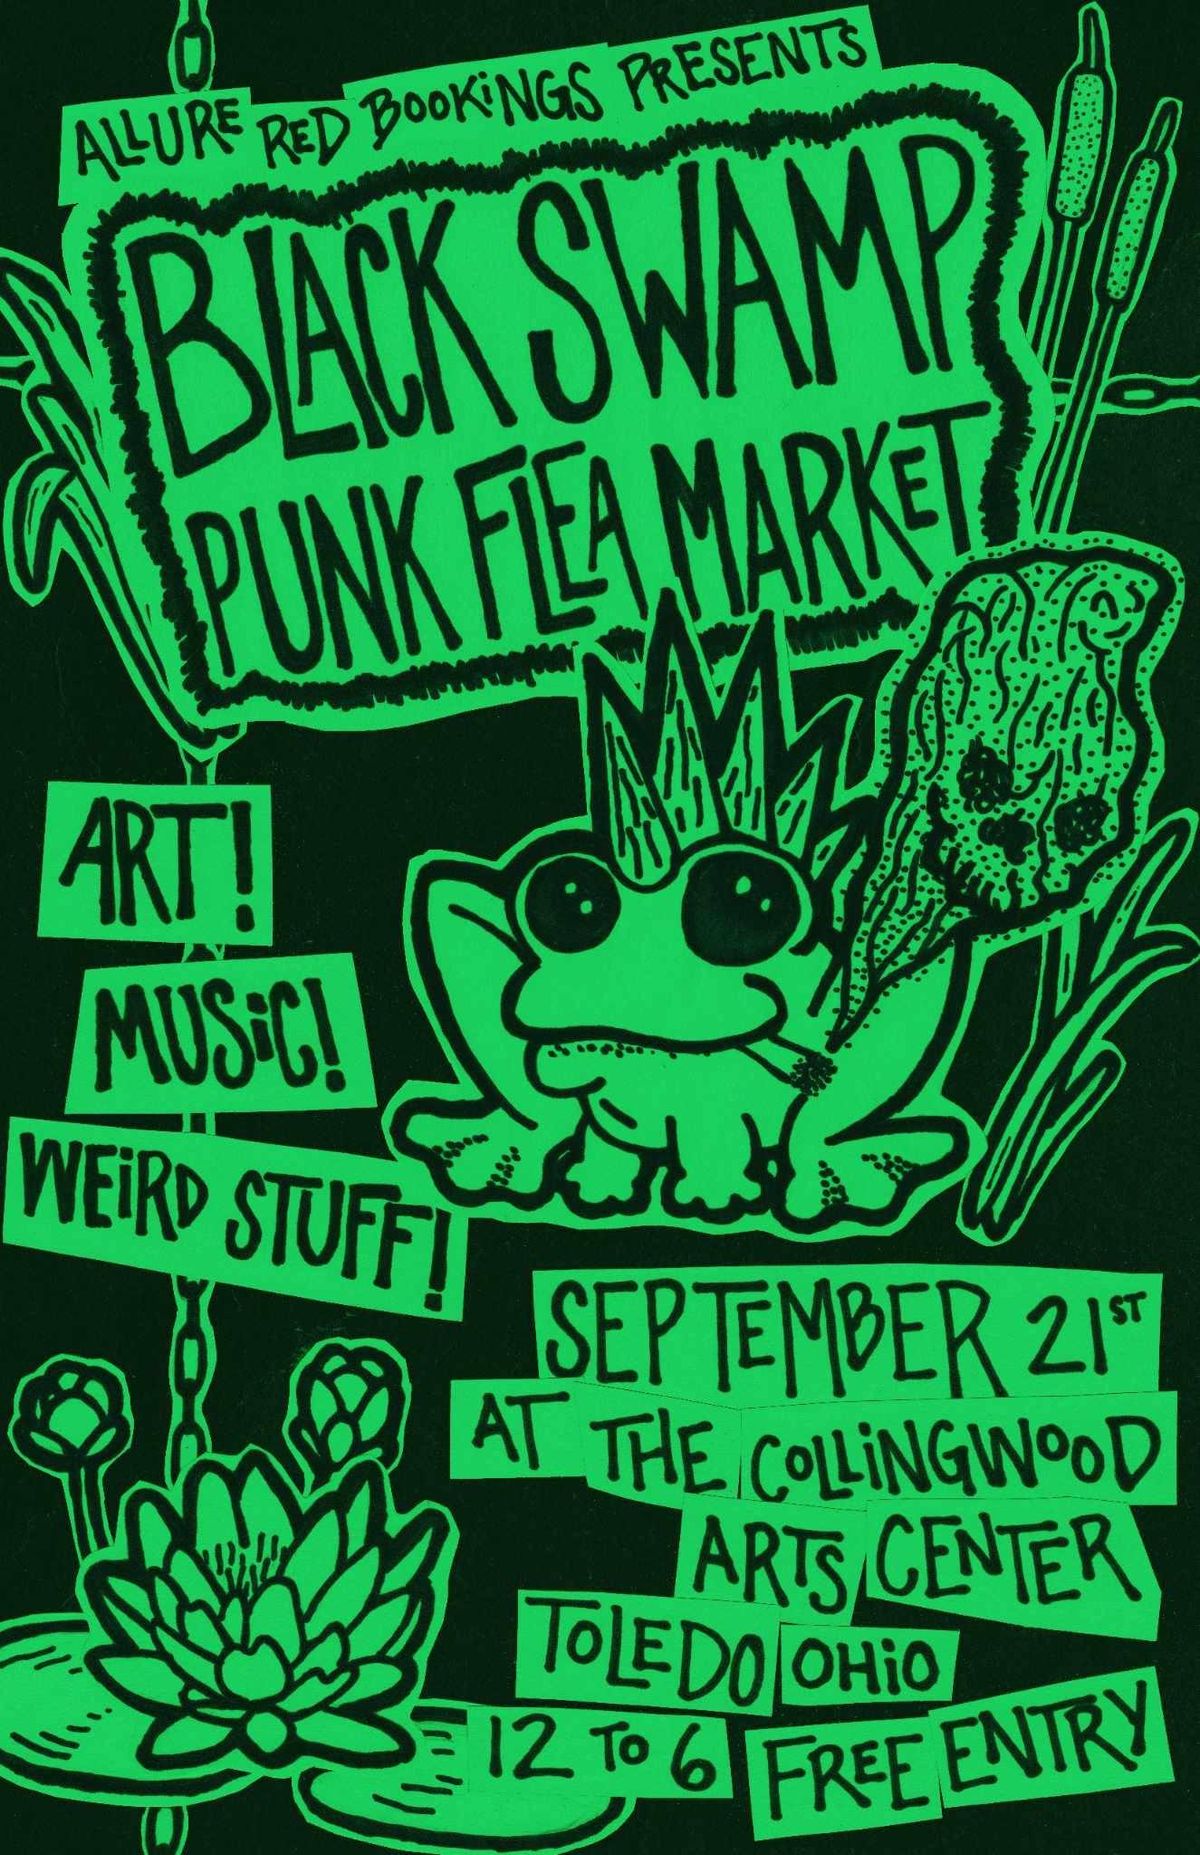 Black Swamp Punk Flea Market